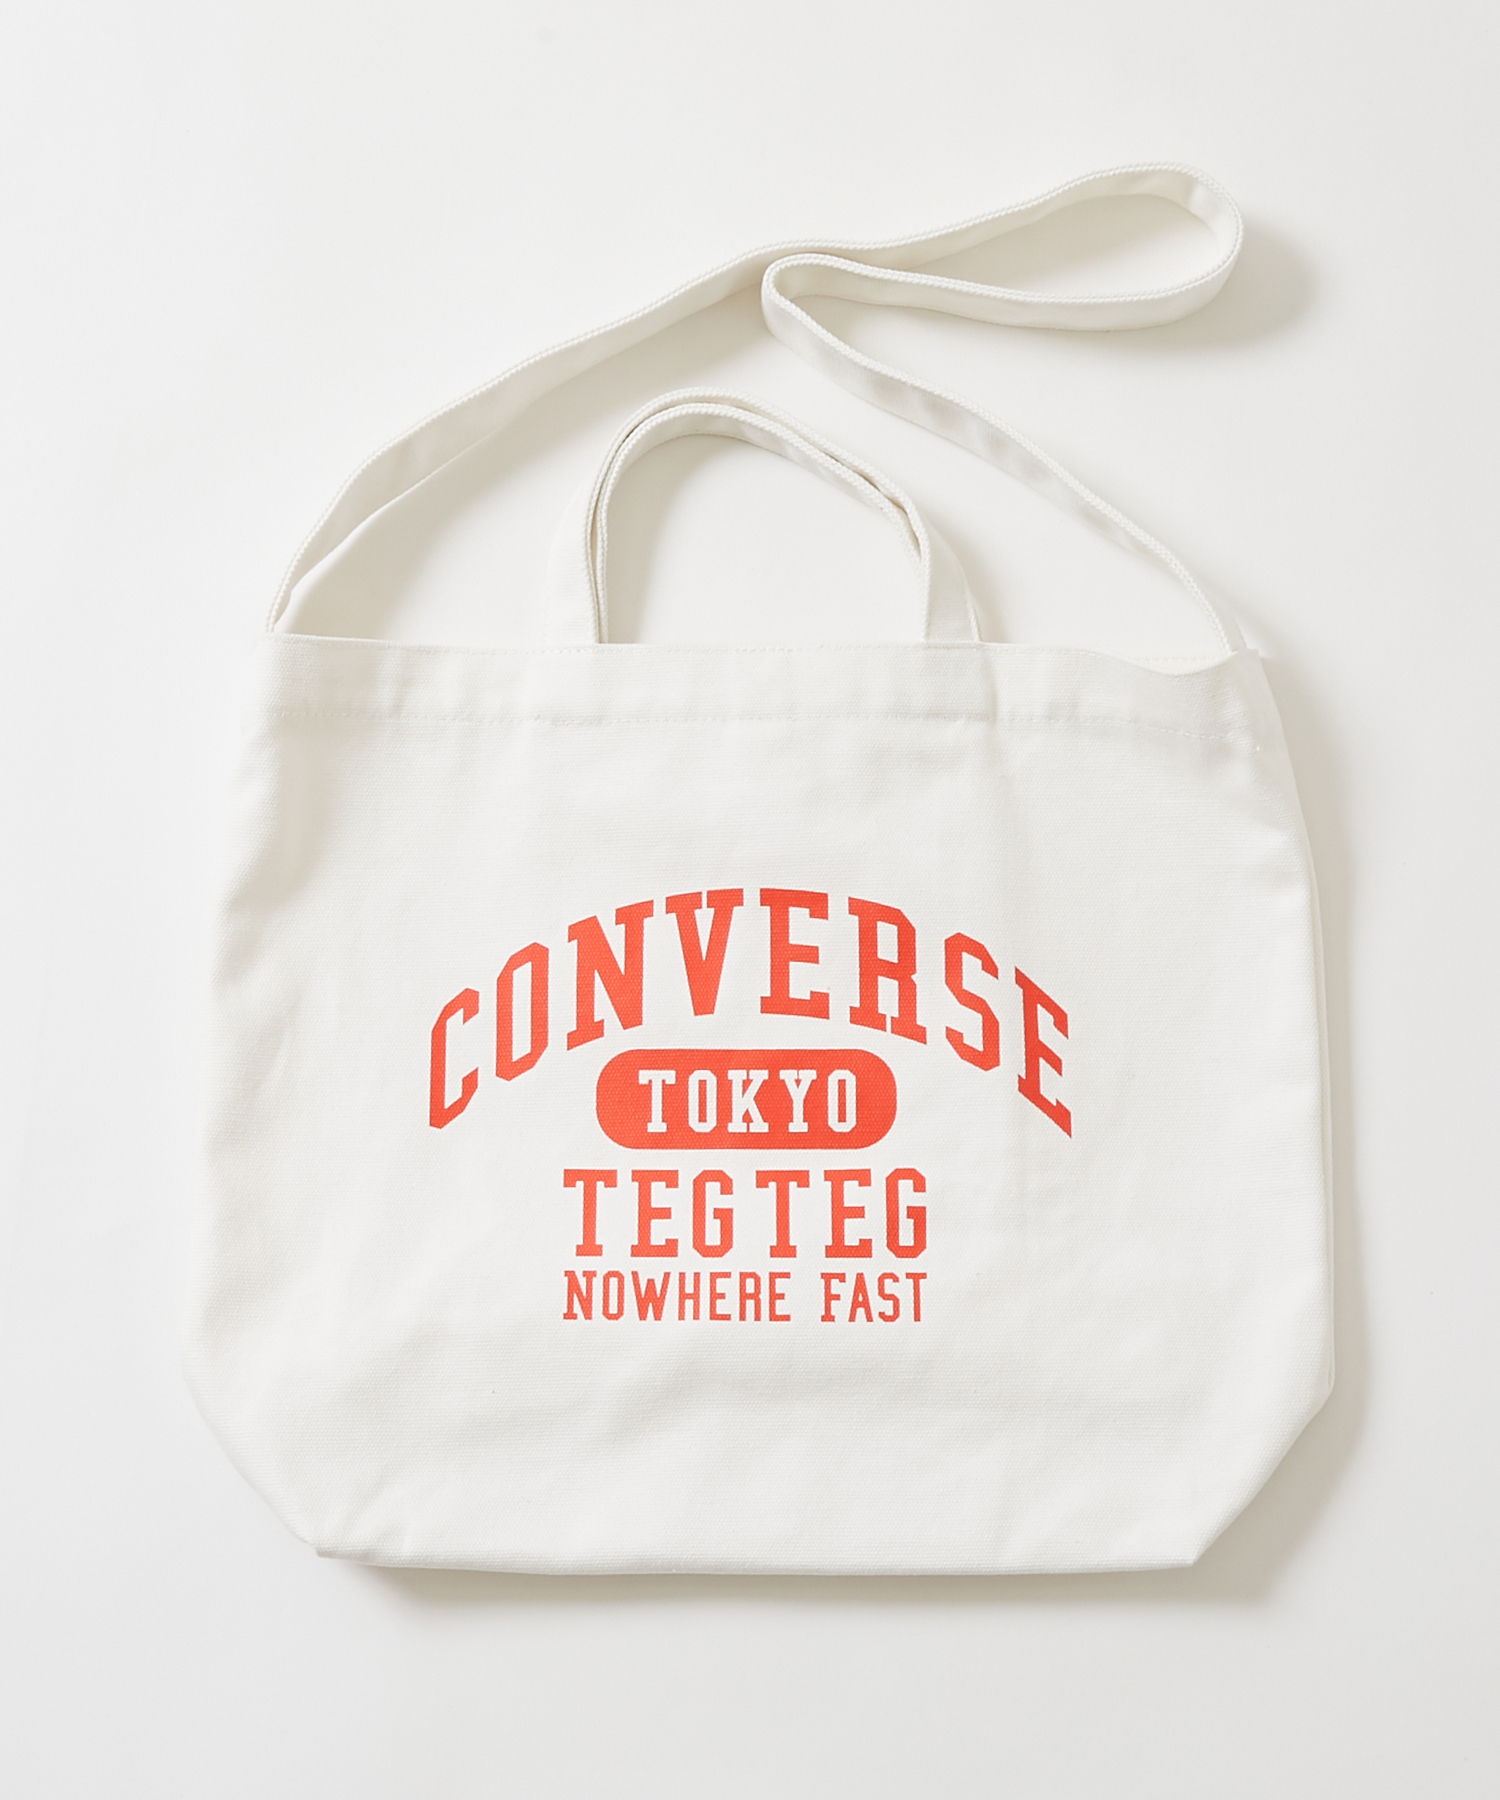 Teg Teg Converse Tokyo バッグトートバッグ Converse Tokyo コンバーストウキョウ 公式オンラインストア